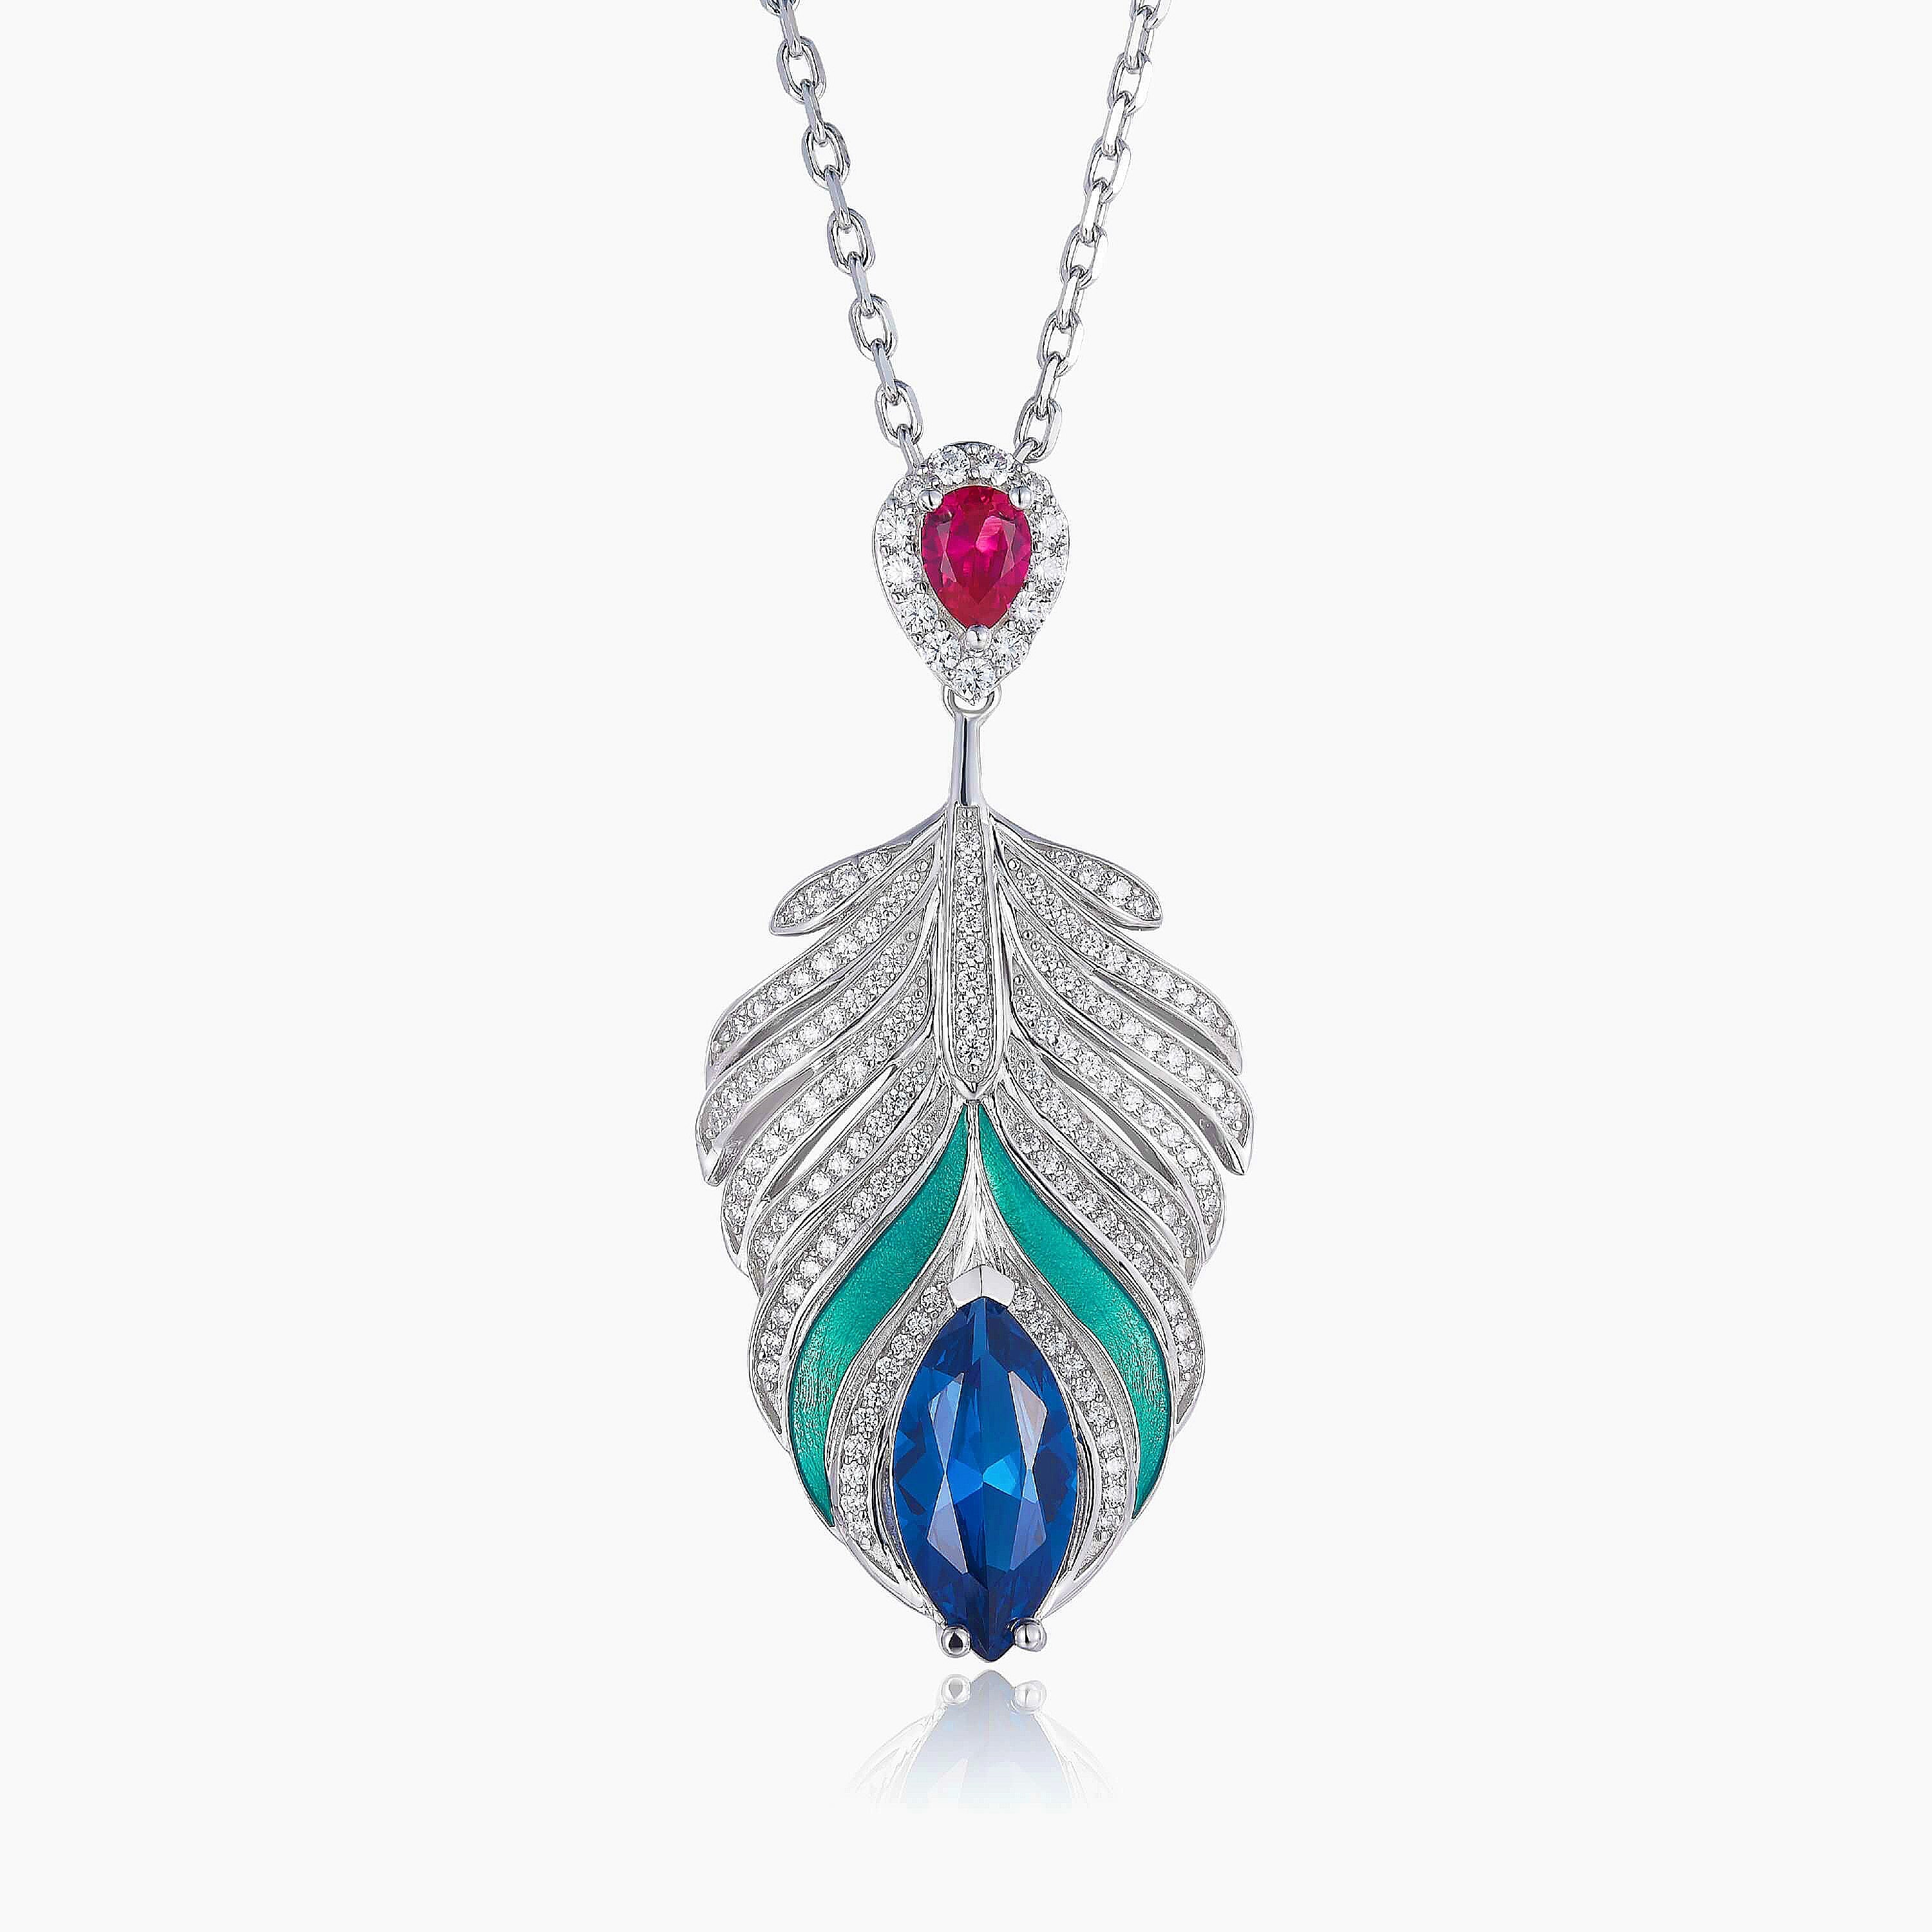 GC Oxidized Krishna Peacock Feather Necklace set with earrings/iskon  jewelry | eBay